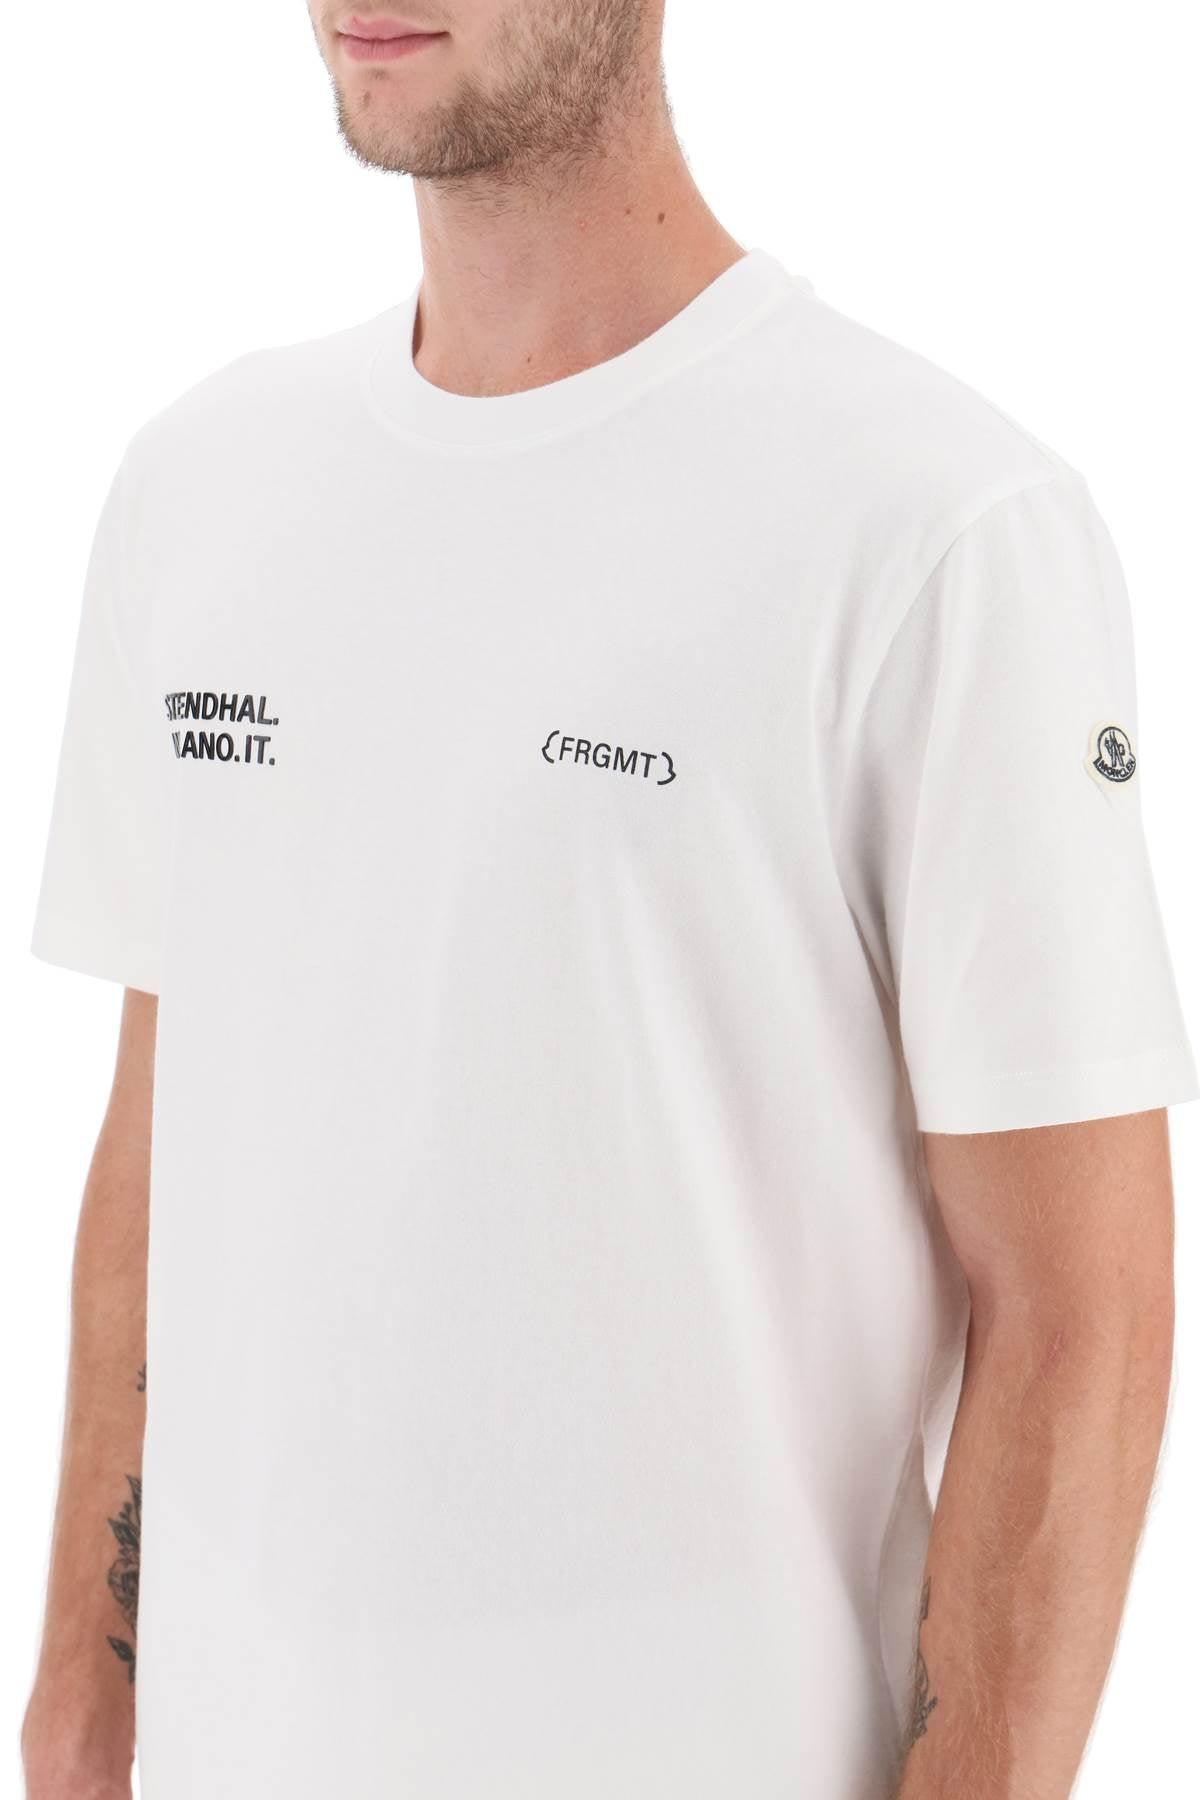 Moncler Genius Lettering Print Cotton T-shirt in White for Men | Lyst